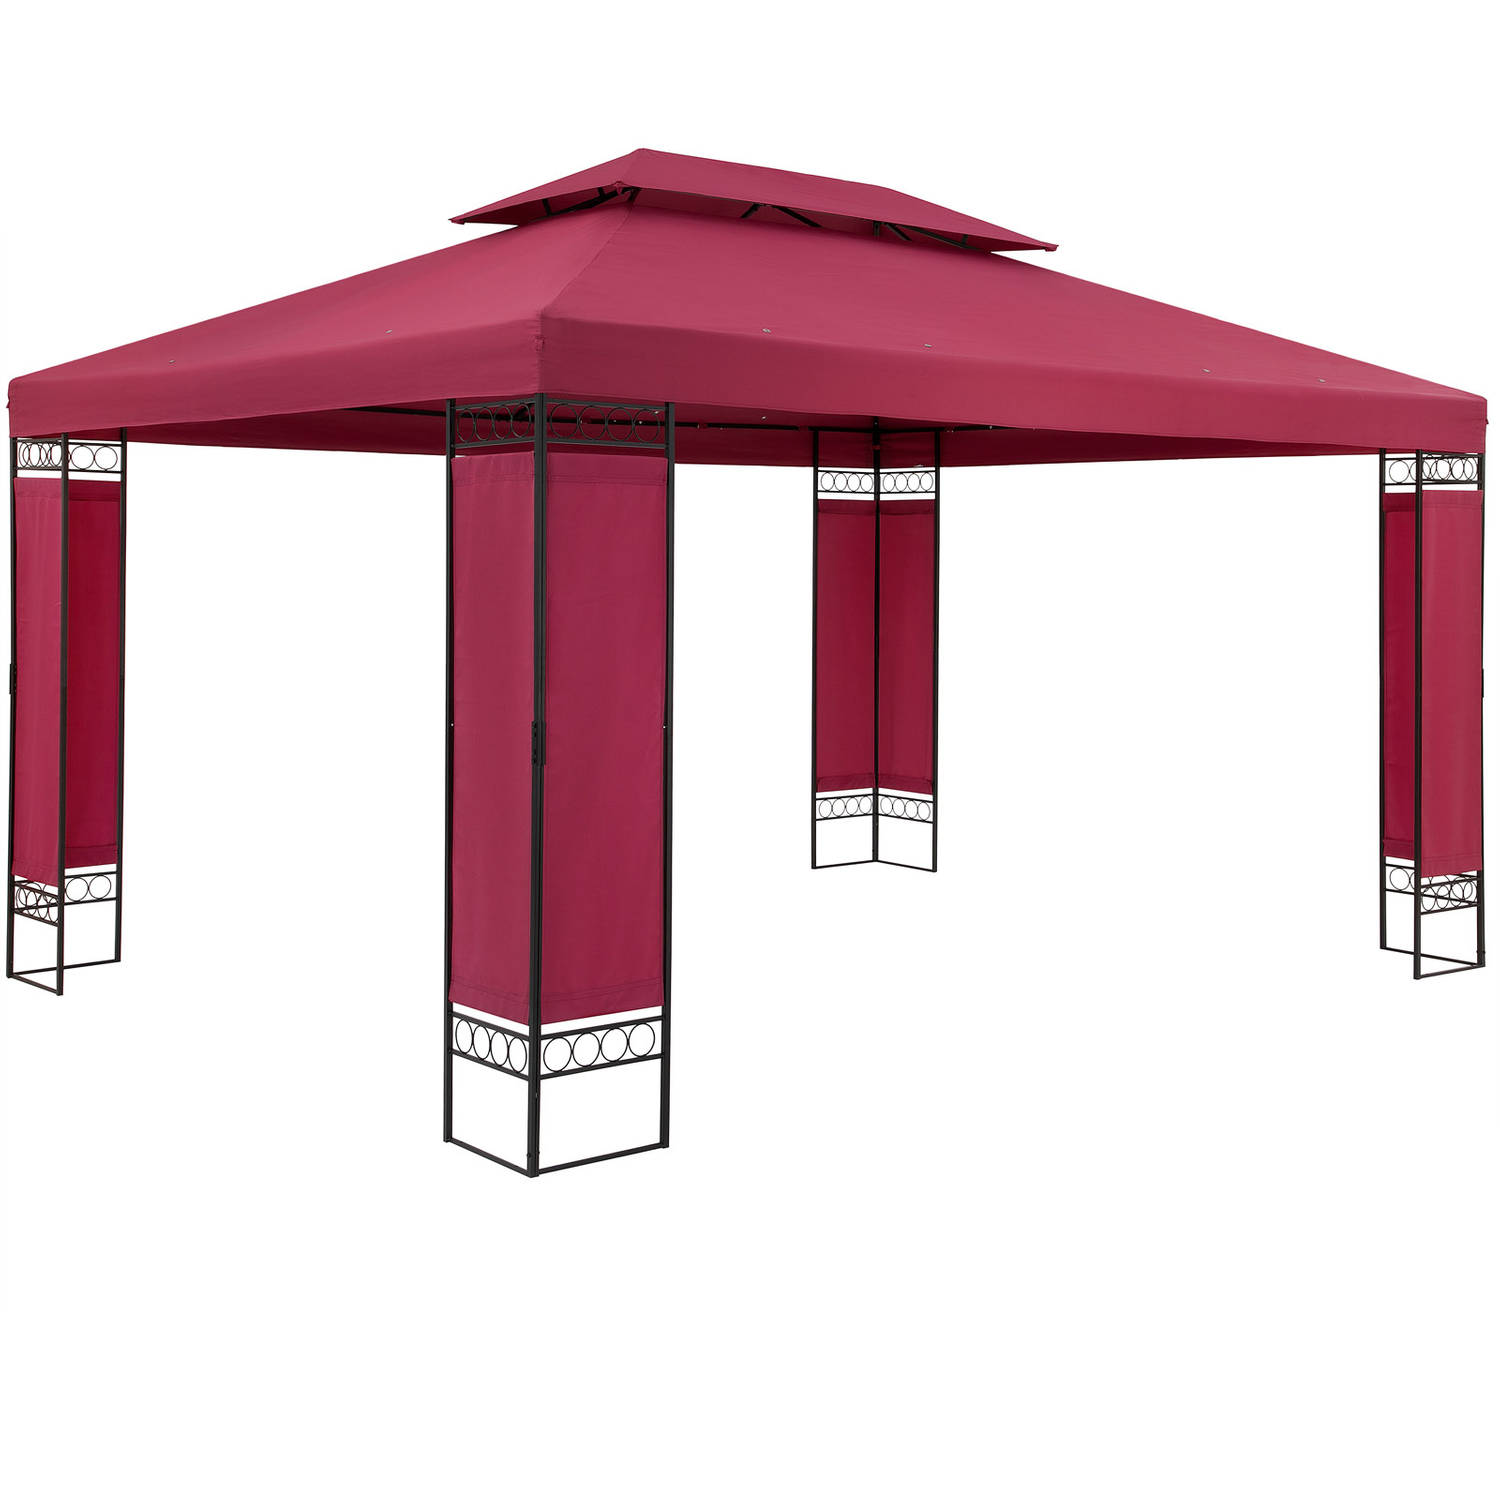 Paviljoen Partytent ELDAR (4x3) bordeaux rood